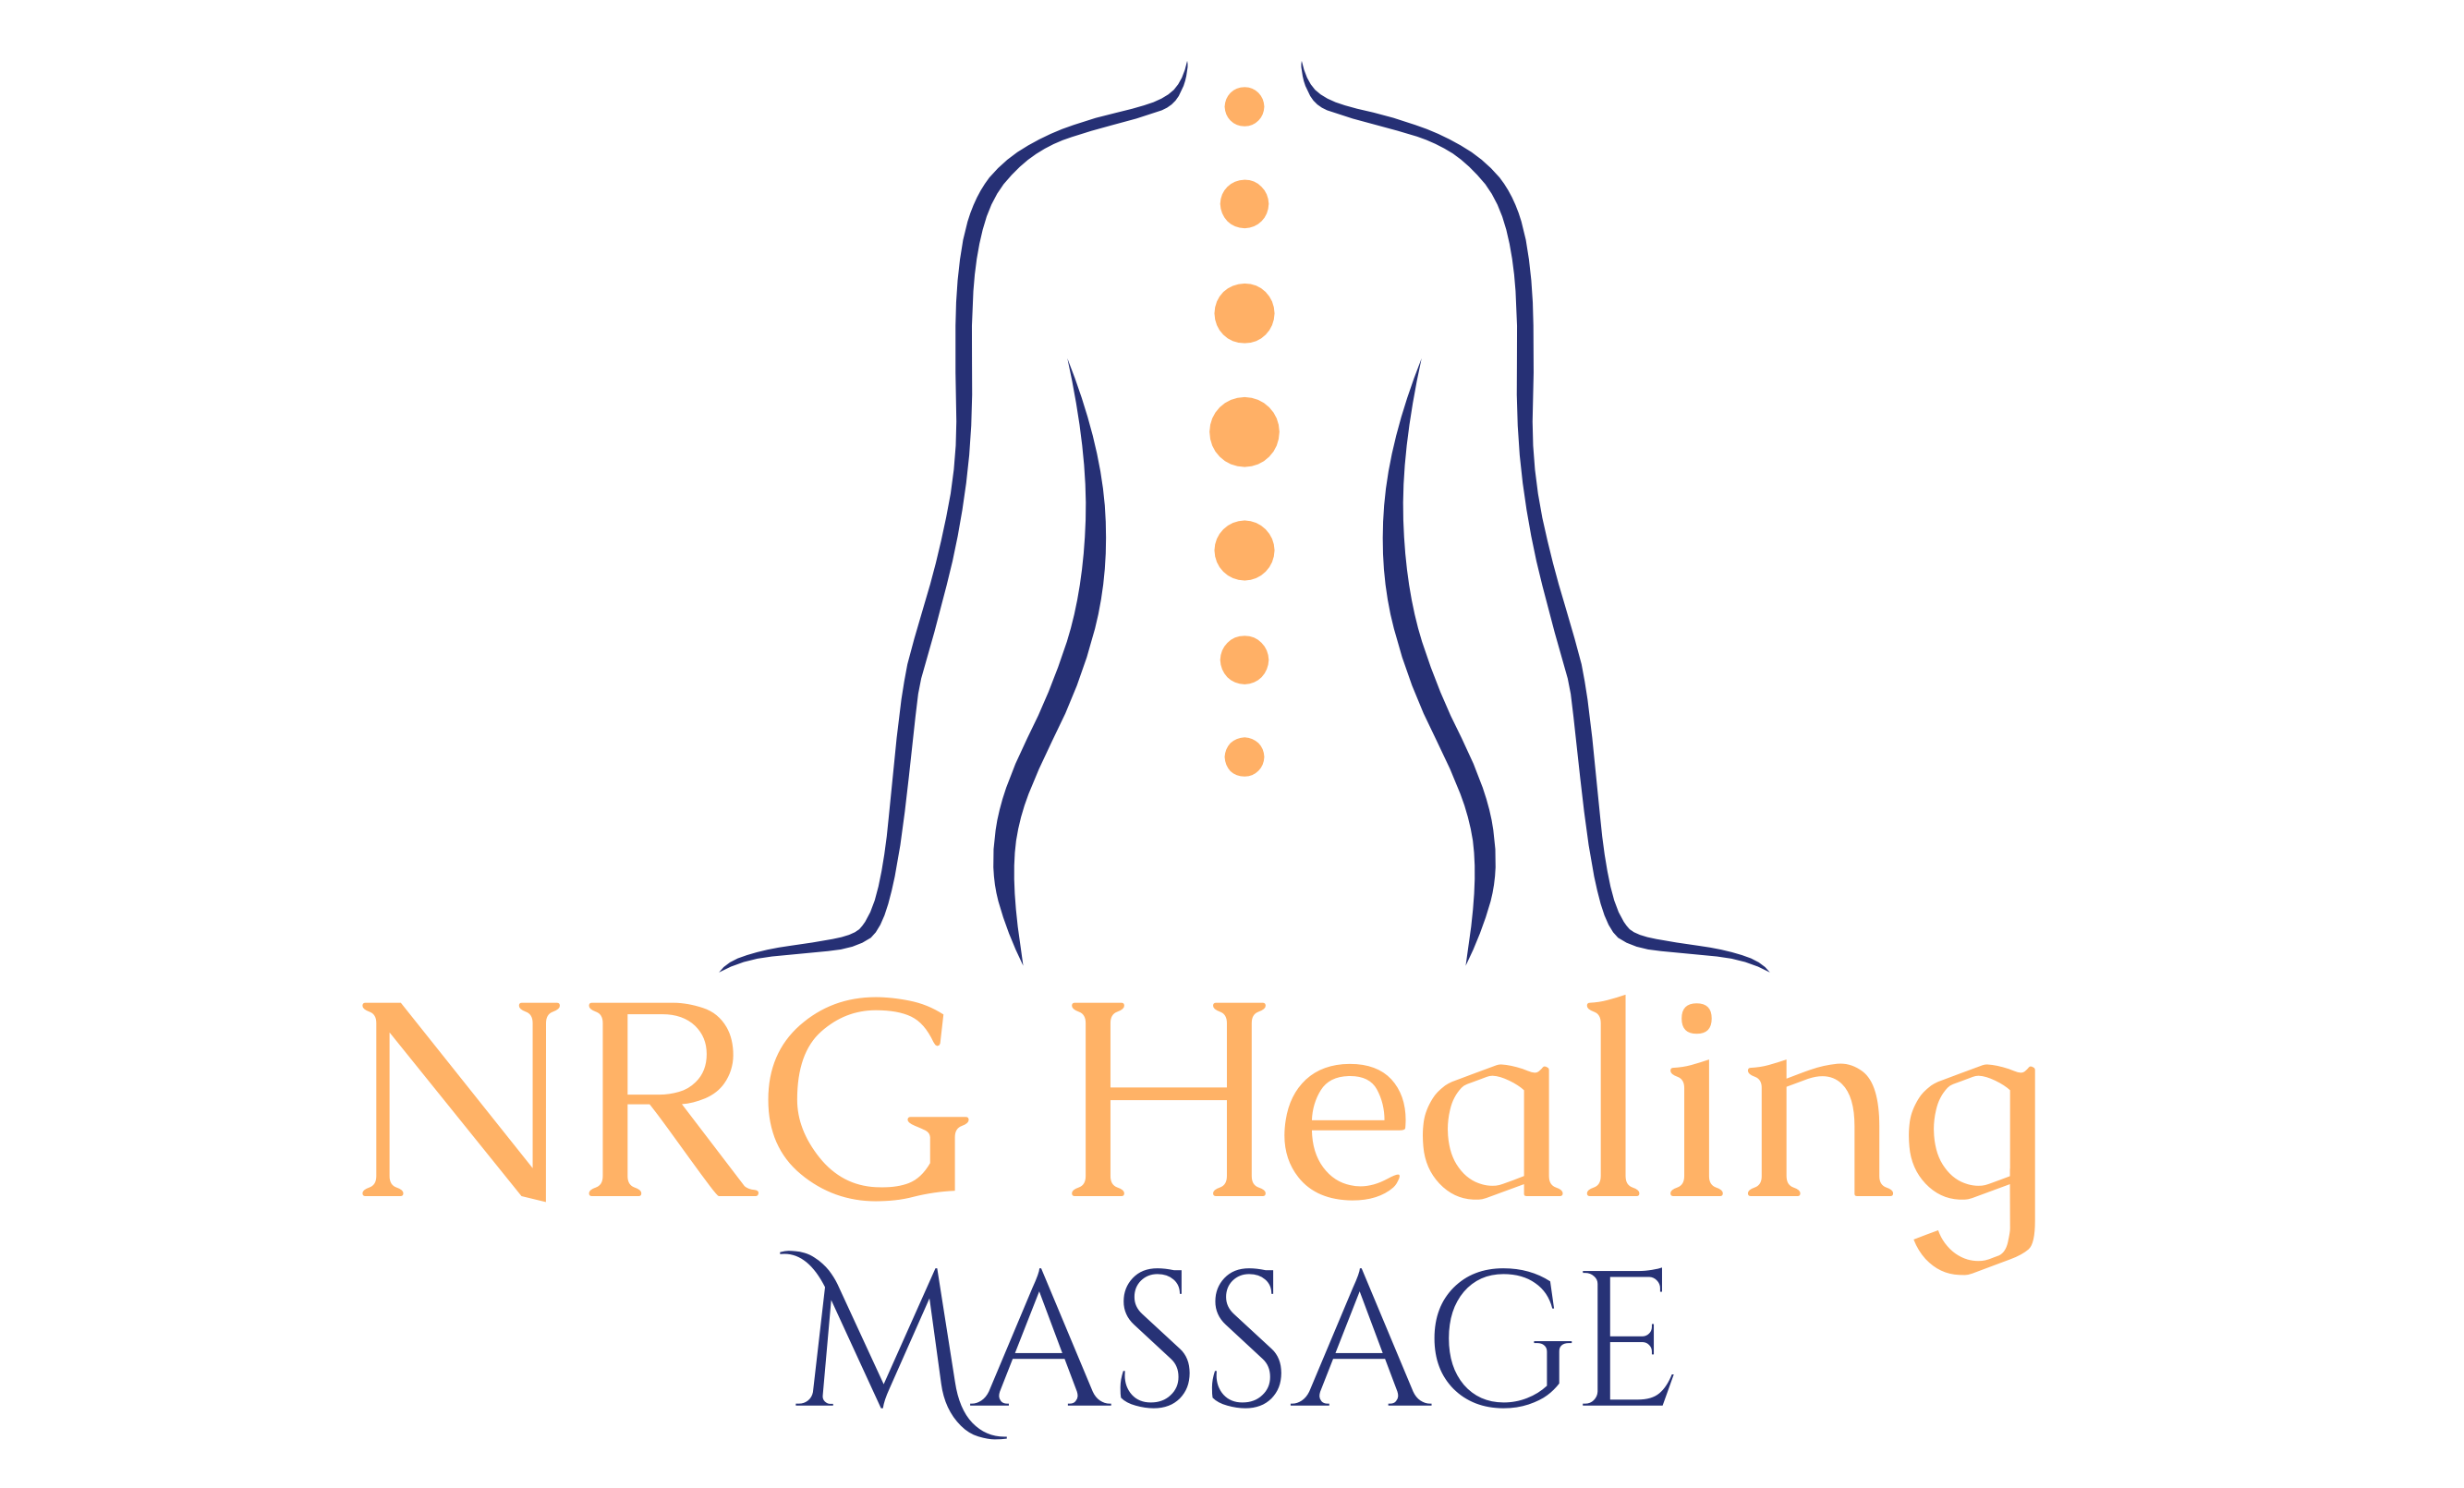 NRG Healing Massage